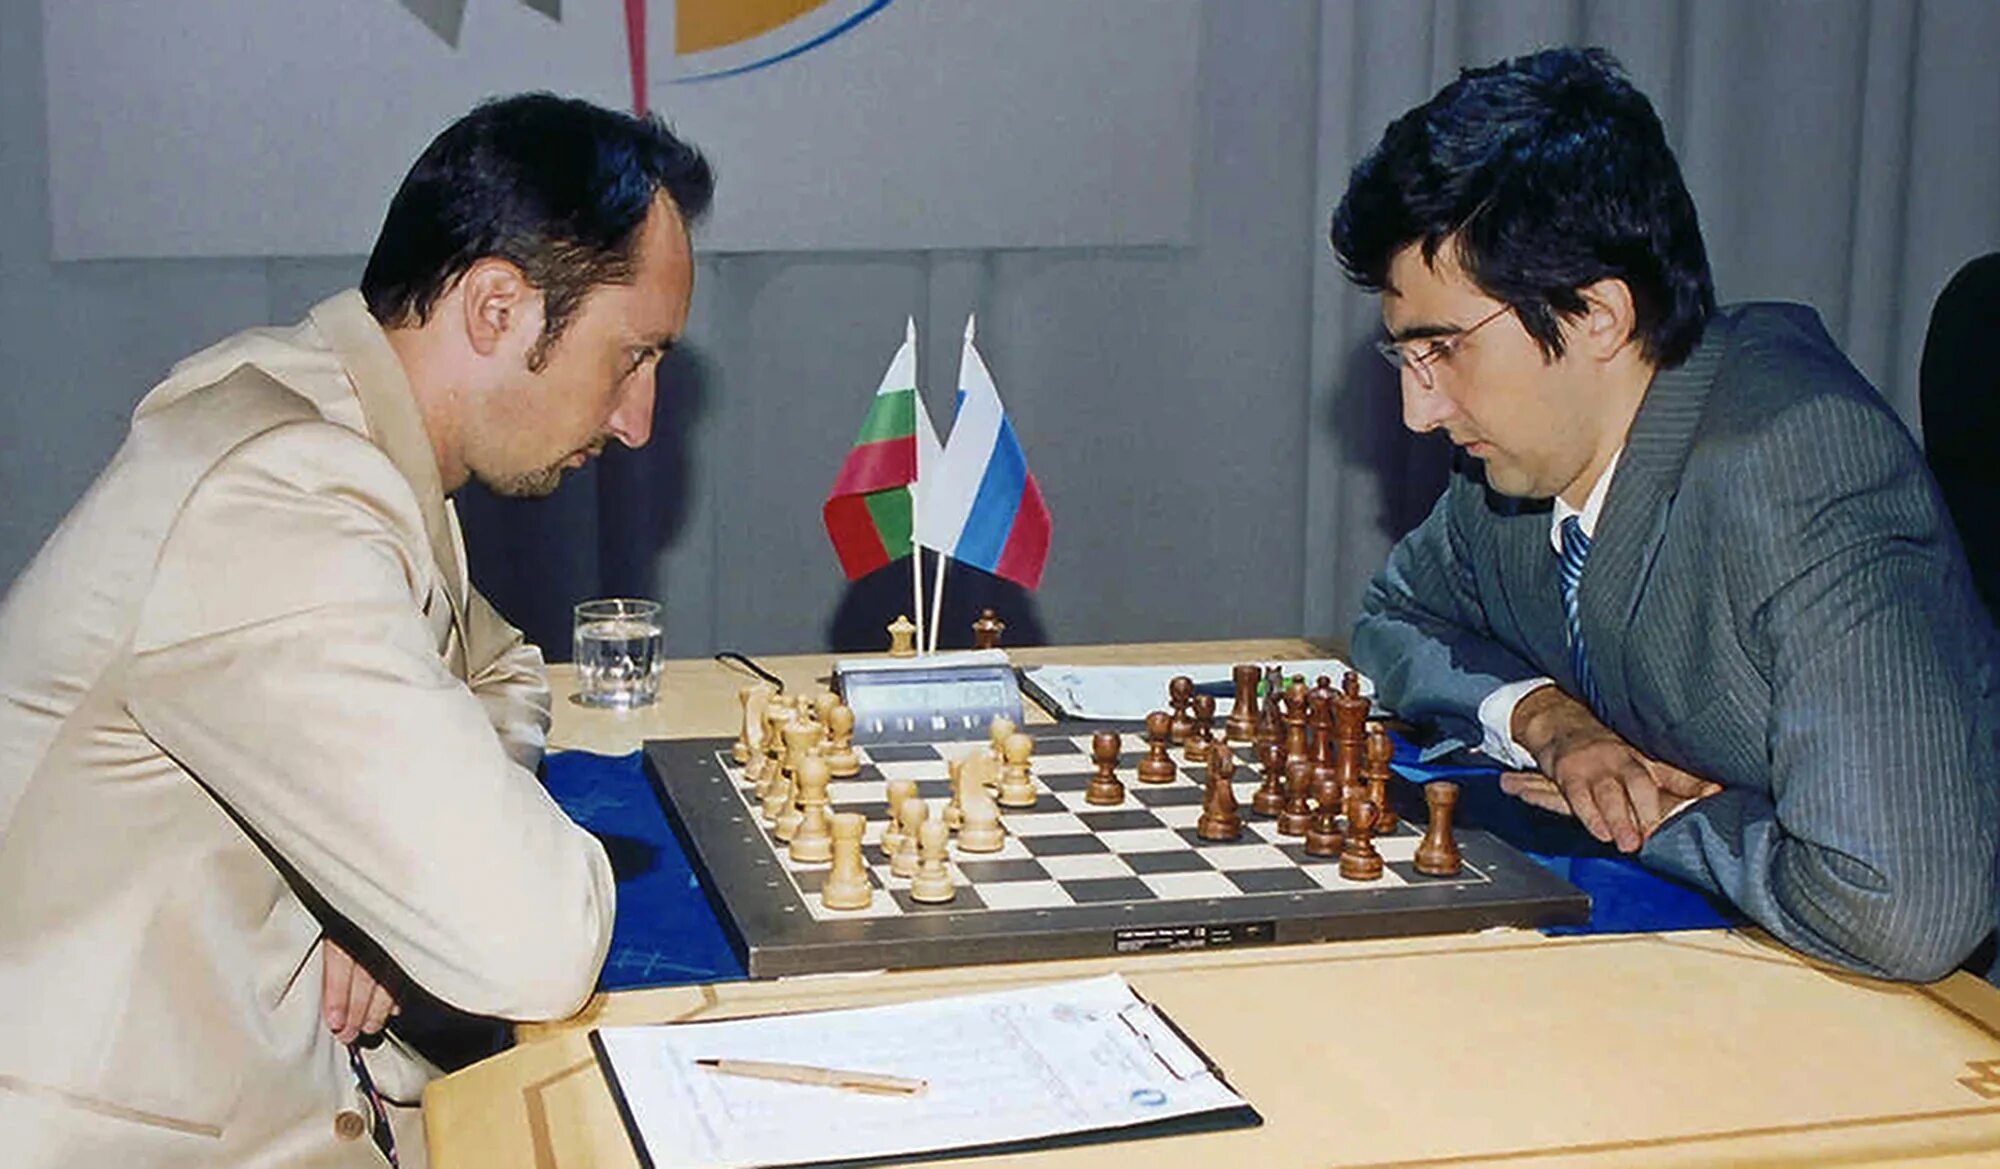 Крамник Топалов 2006. Веселин Топалов шахматист. Чемпионы играют в шахматы